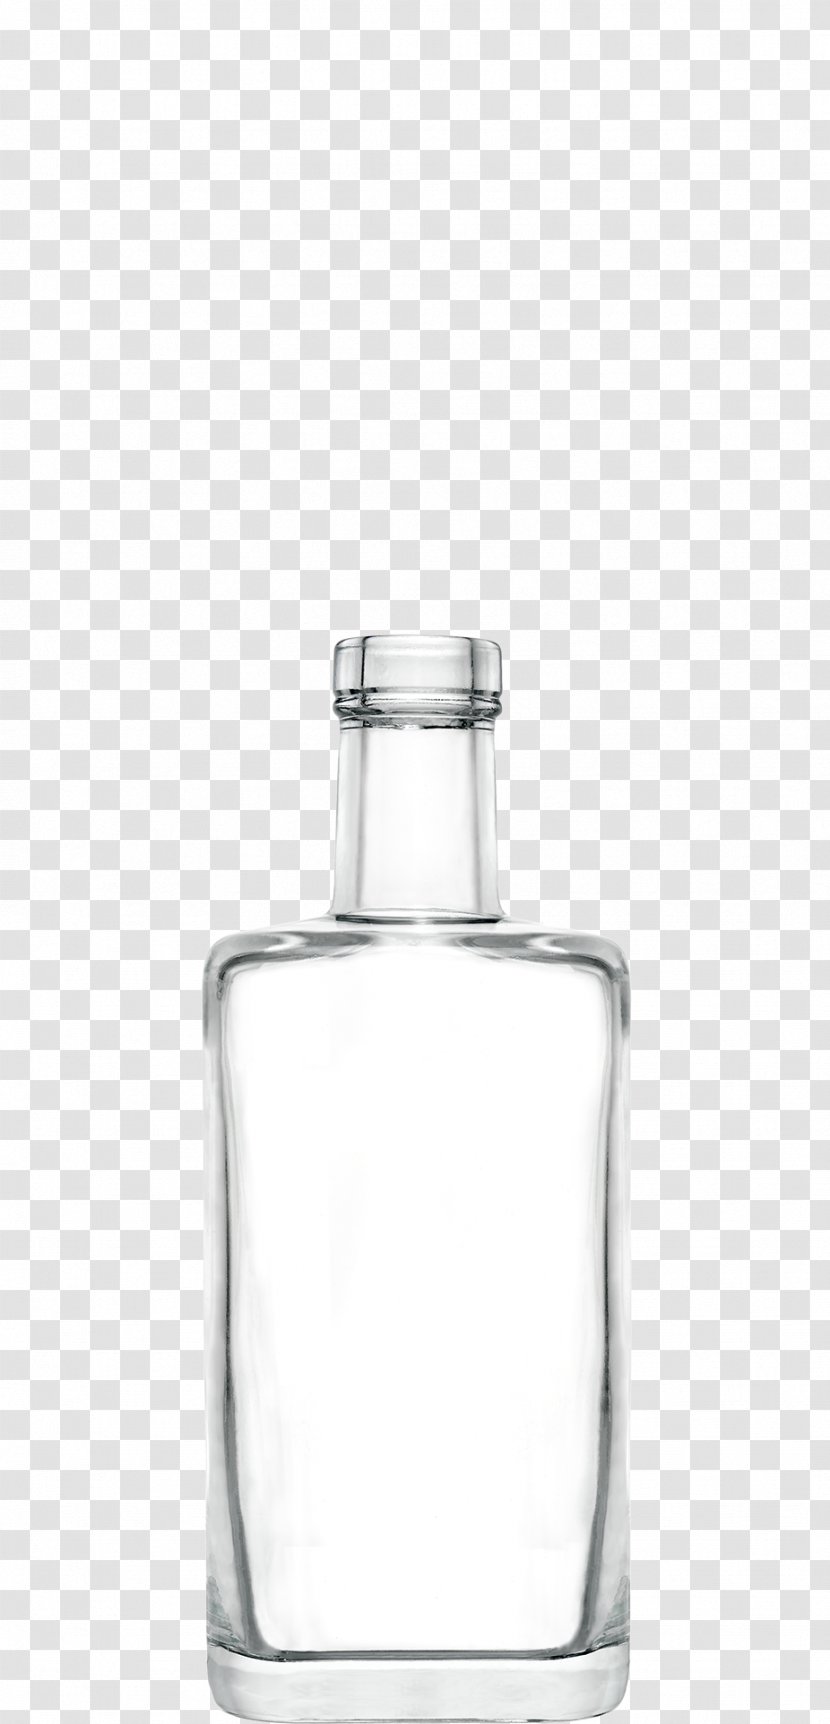 Glass Bottle Distilled Beverage Decanter Baileys Irish Cream - Vodka Transparent PNG